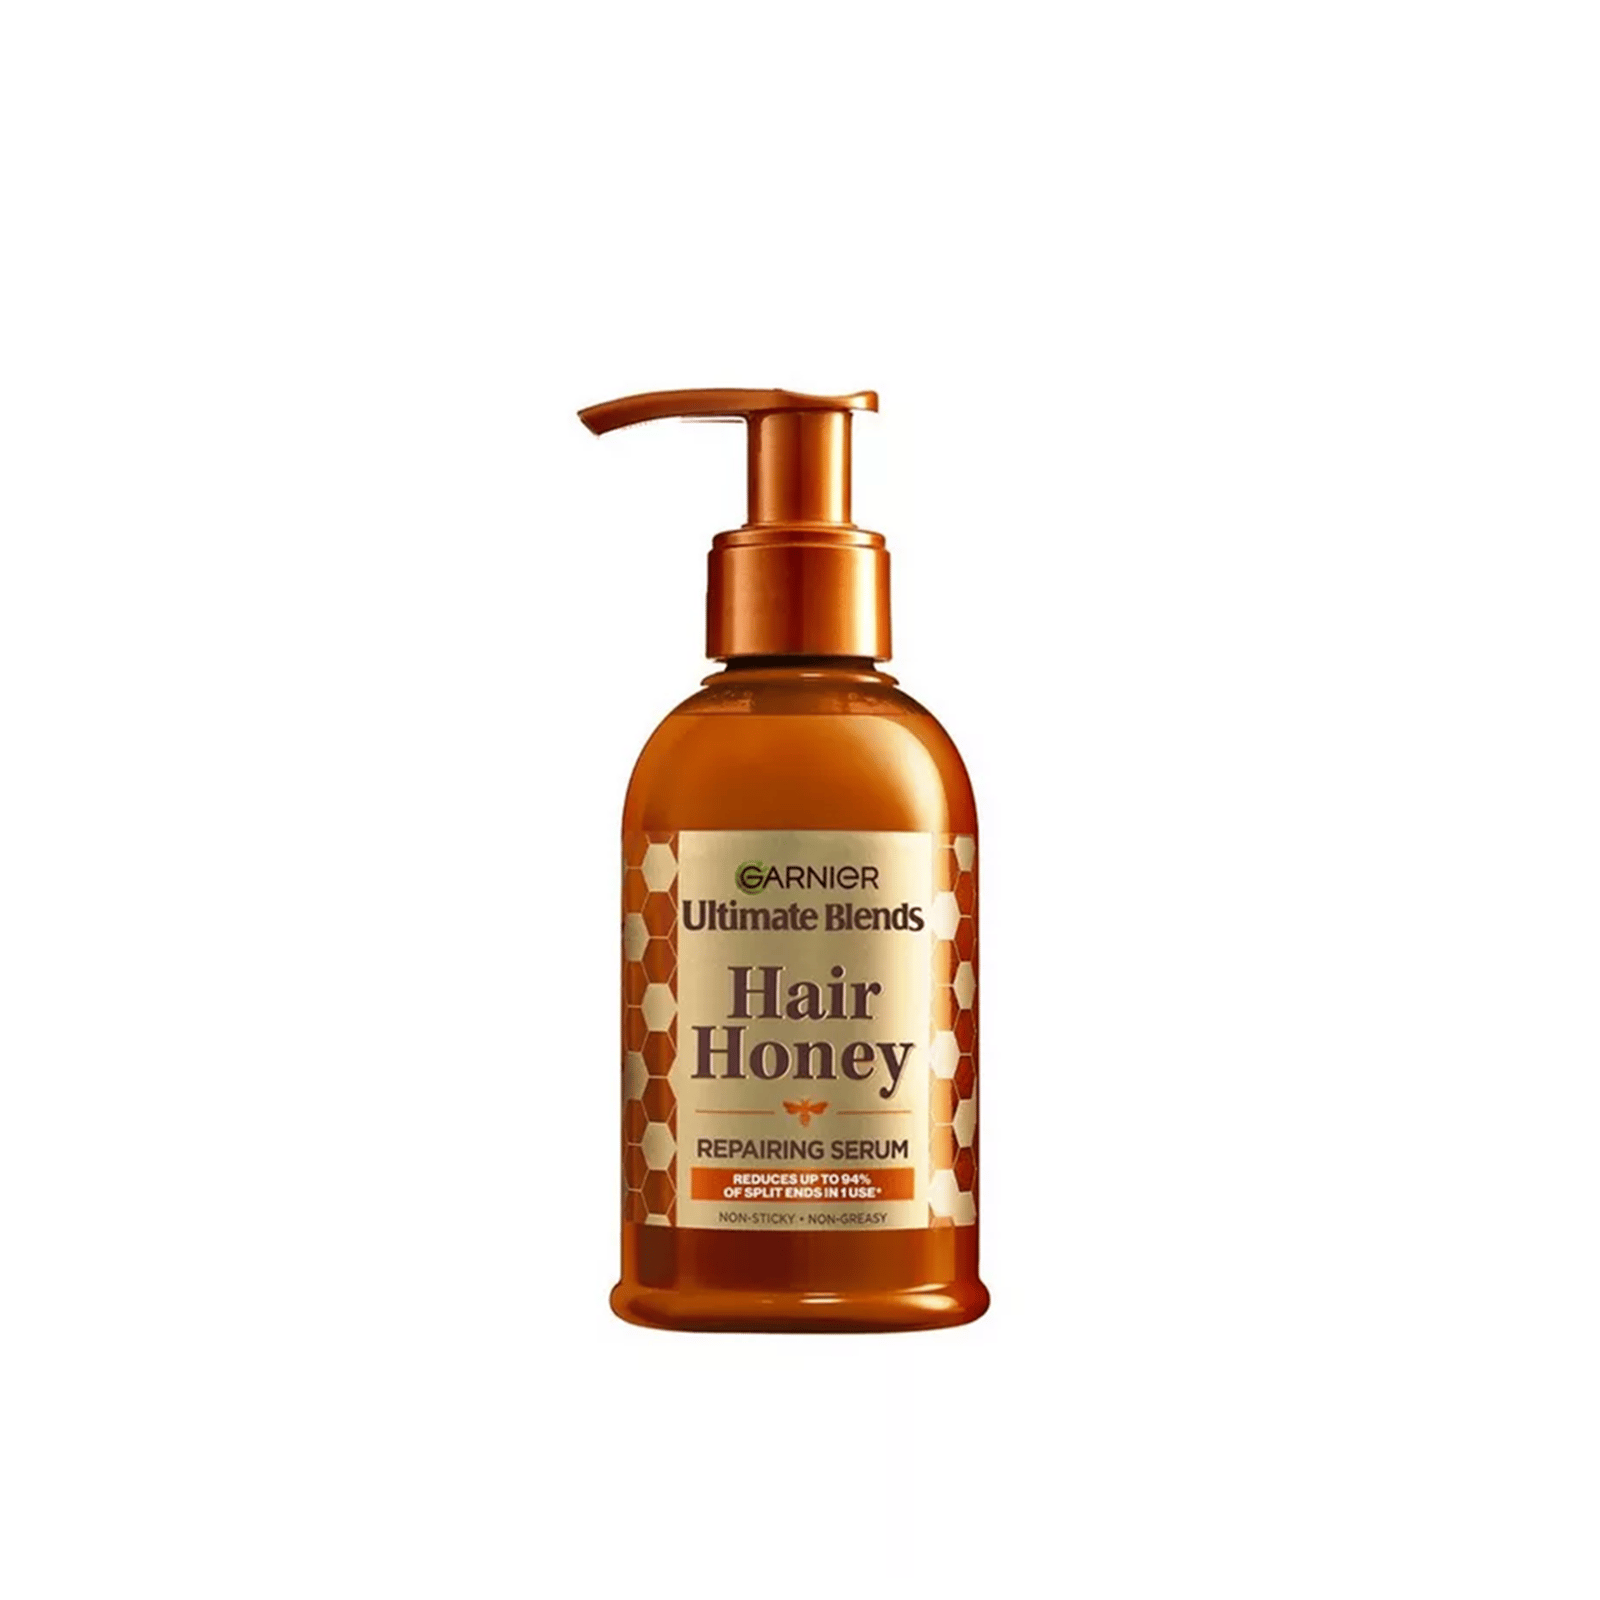 Garnier Ultimate Blends Hair Honey Repairing Serum 115ml (3.88floz)